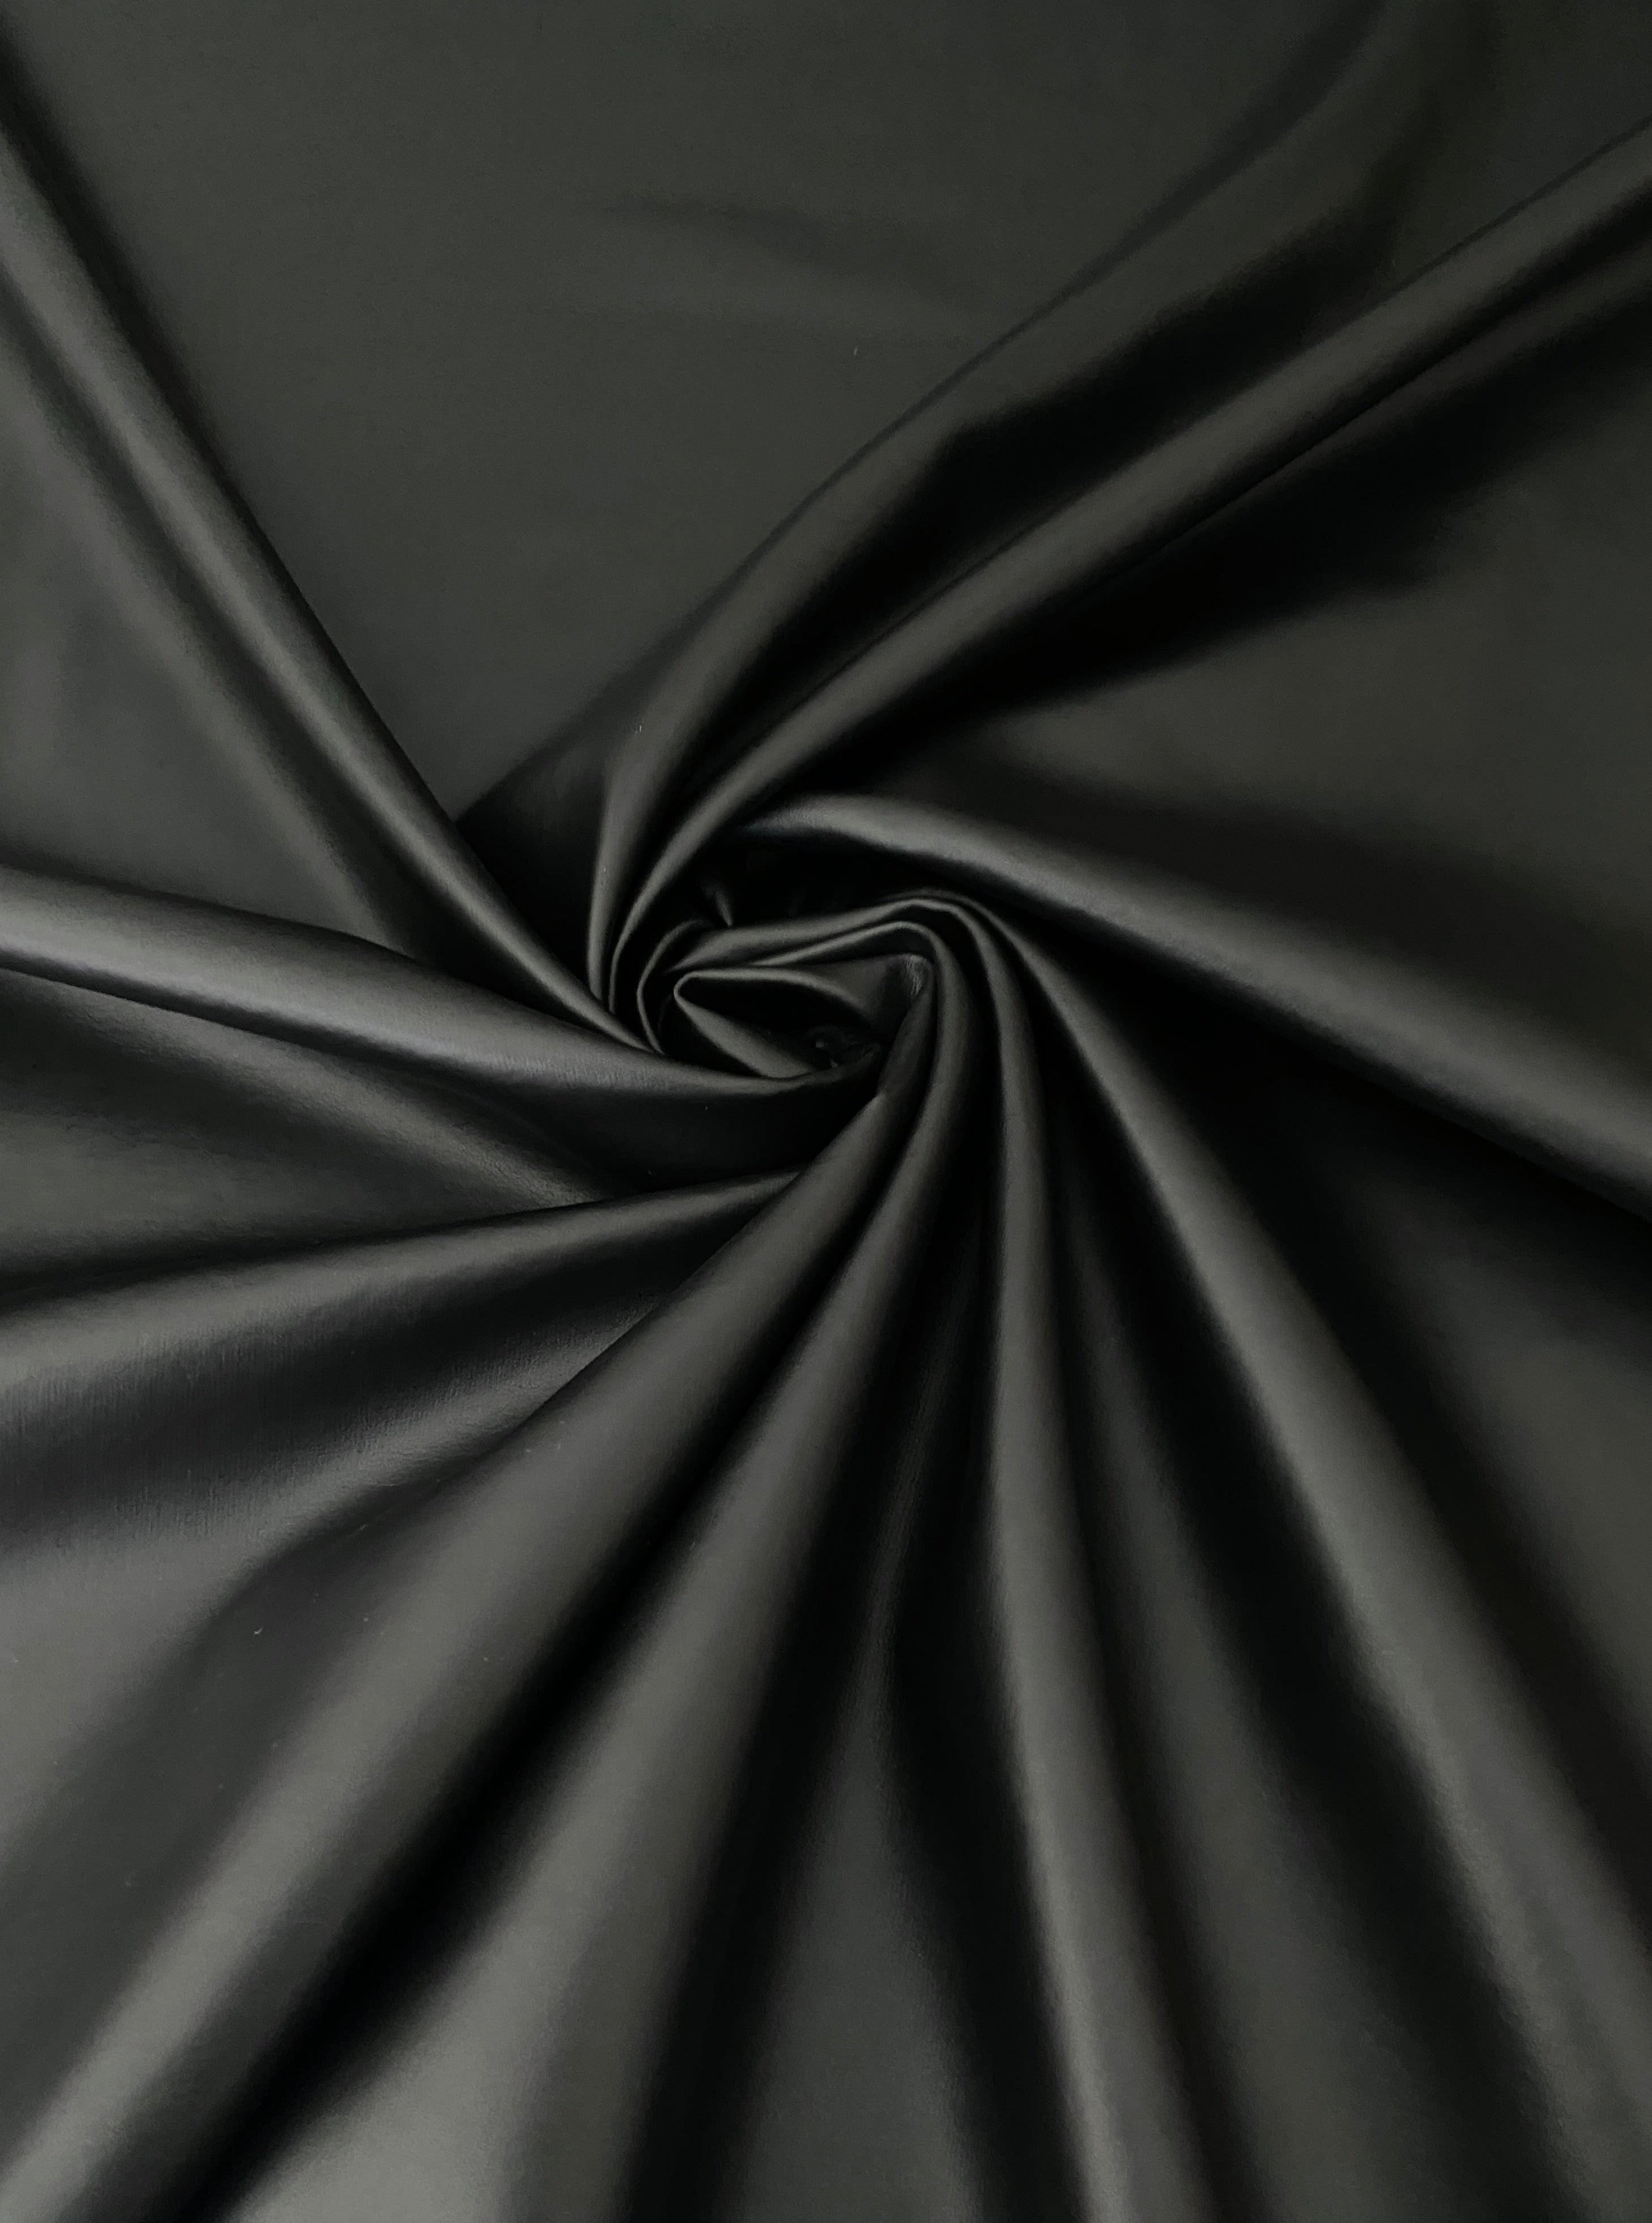 Shop now Black Upholstery Vinyl Fabric by Yard- Kiki Textiles – KikiTextiles